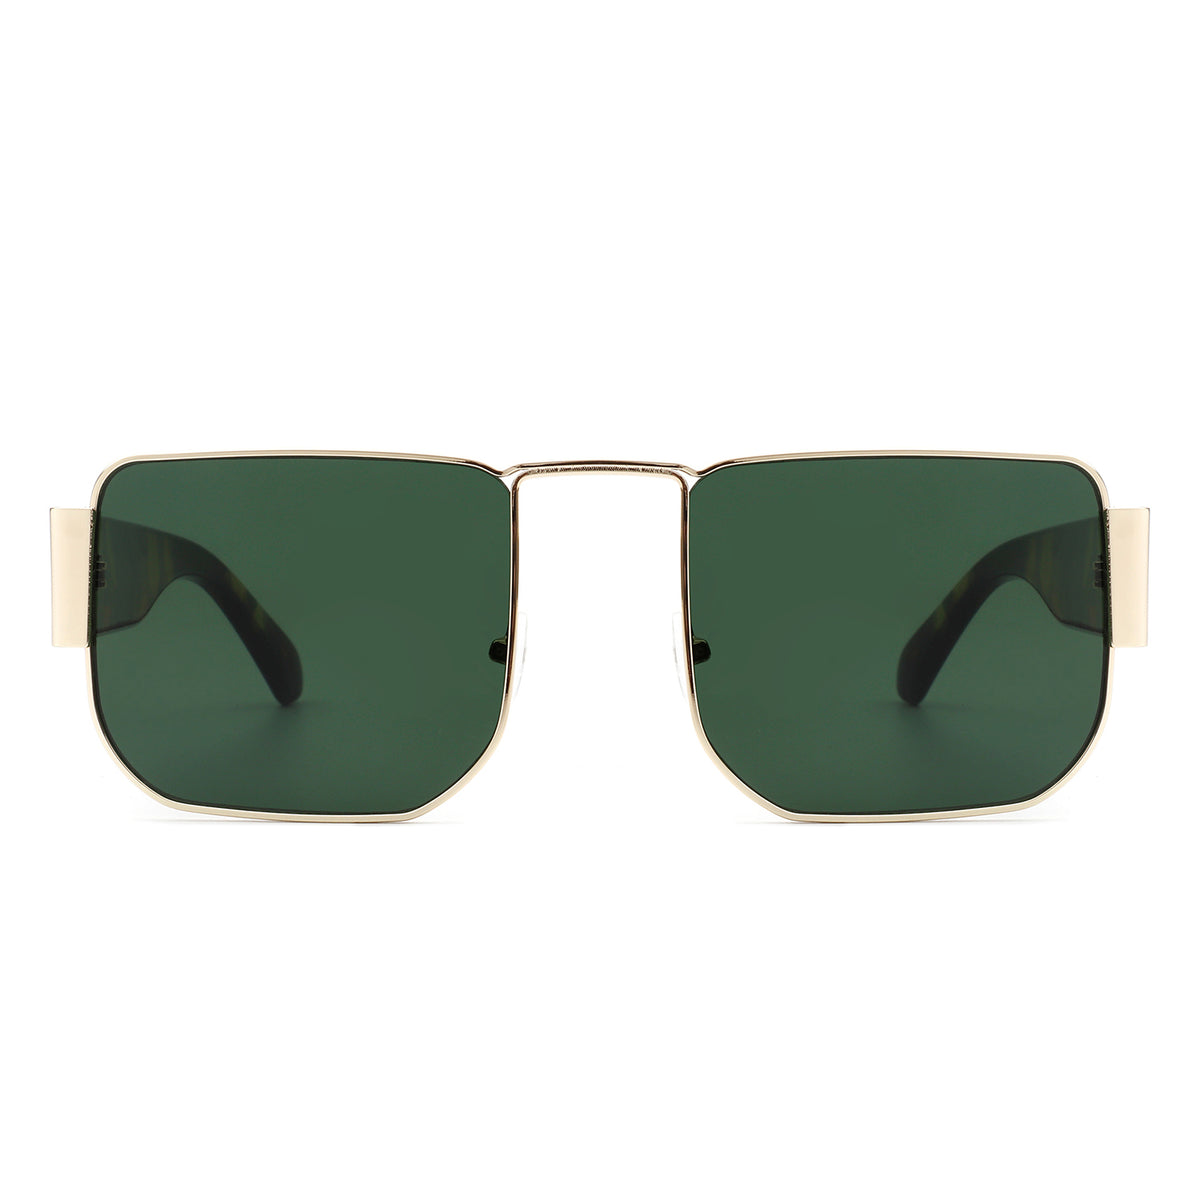 HJ2032 - Square Retro Flat Top Tinted Vintage Fashion Sunglasses